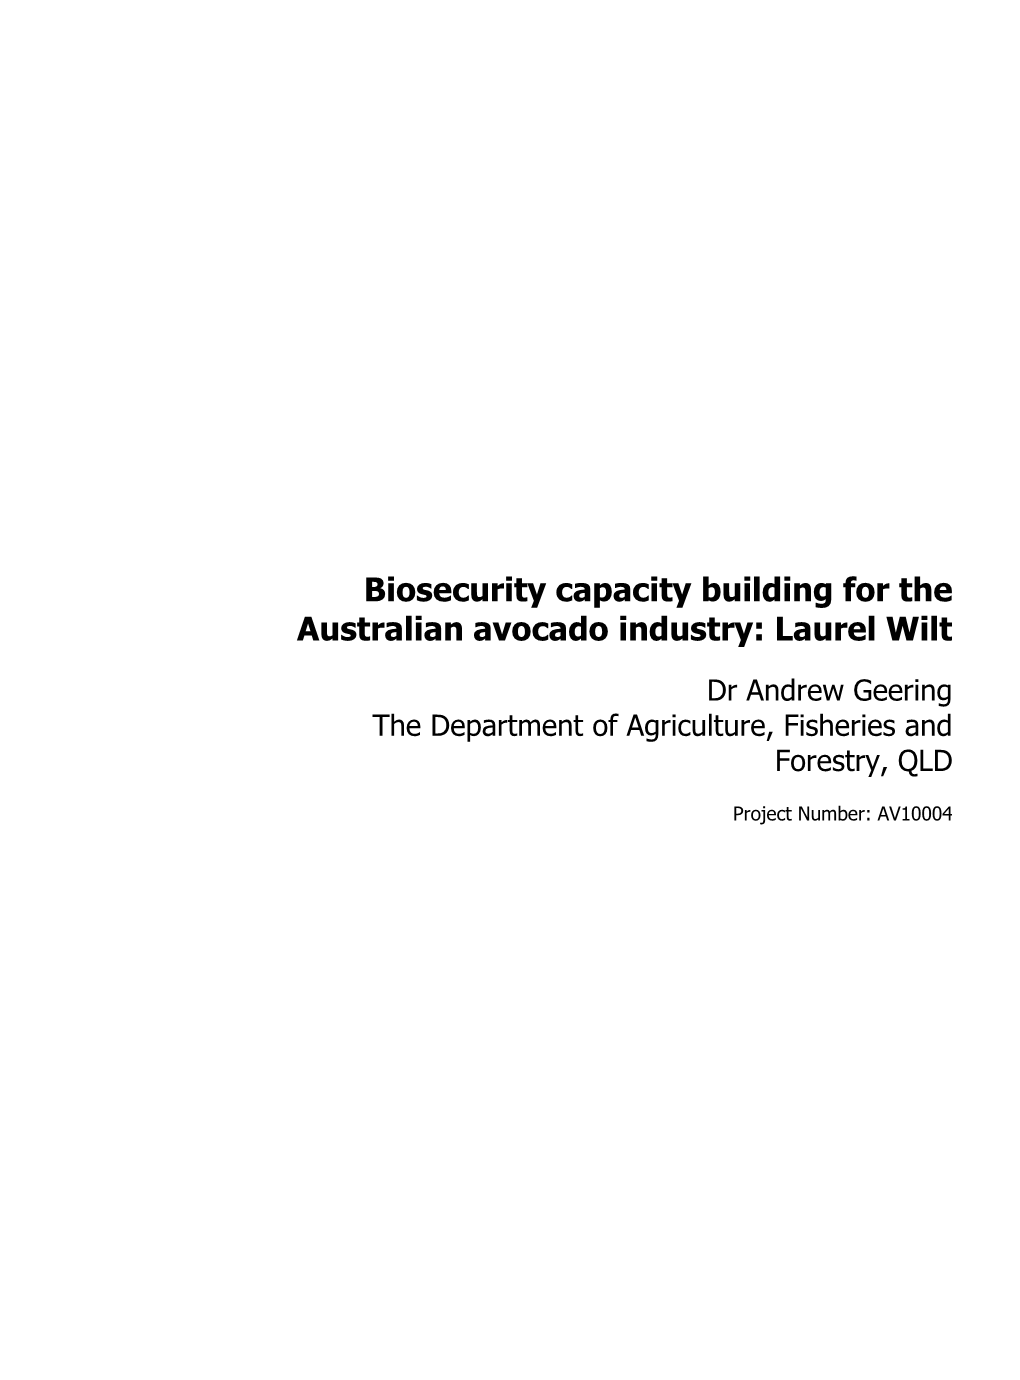 Biosecurity Capacity Building for the Australian Avocado Industry: Laurel Wilt